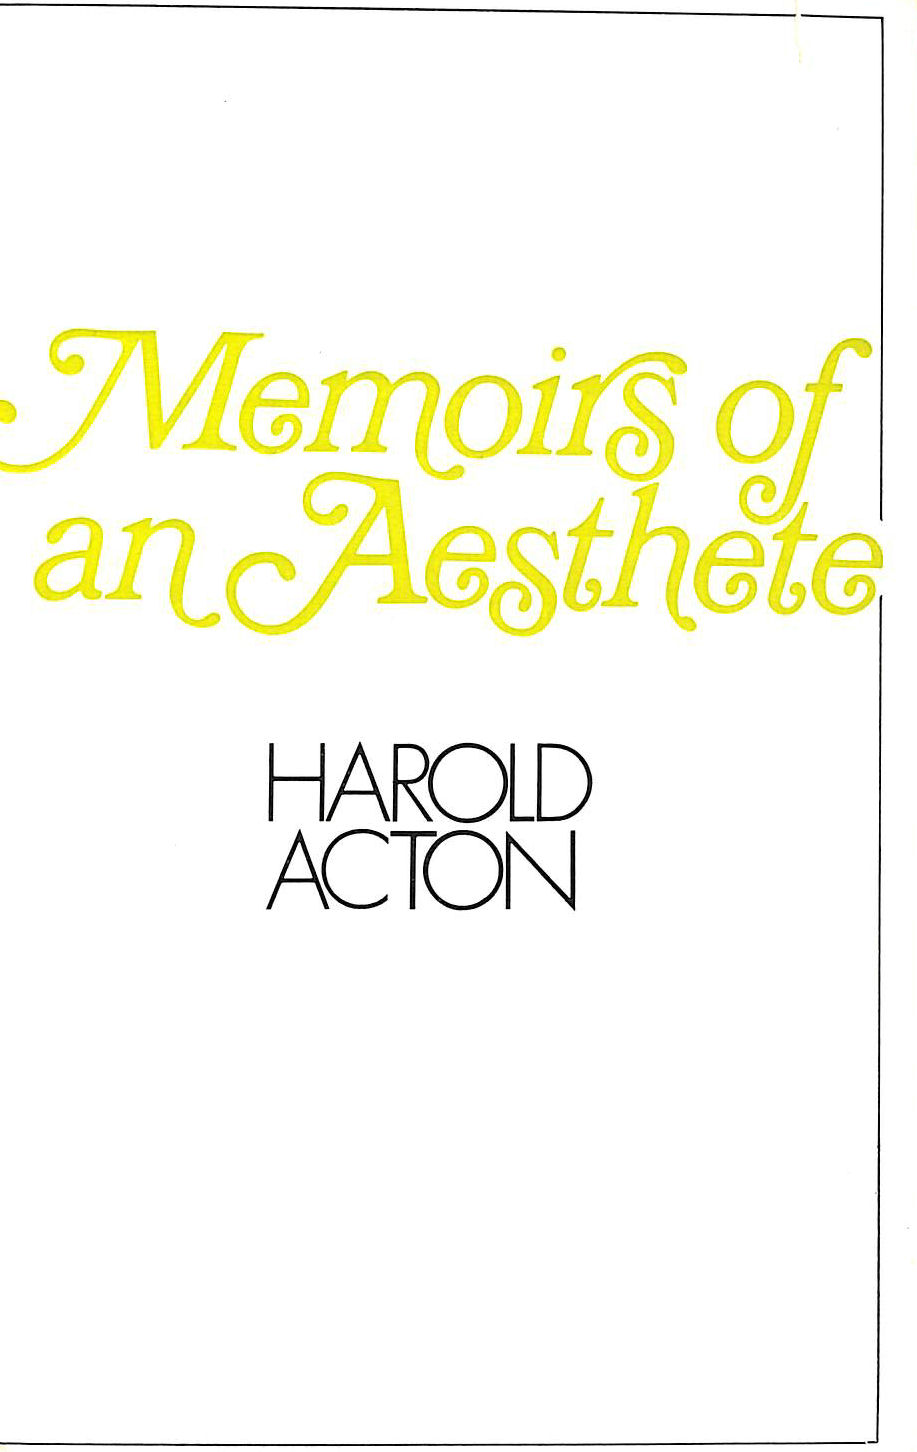 ACTON, HAROLD - Memoirs of an Aesthete